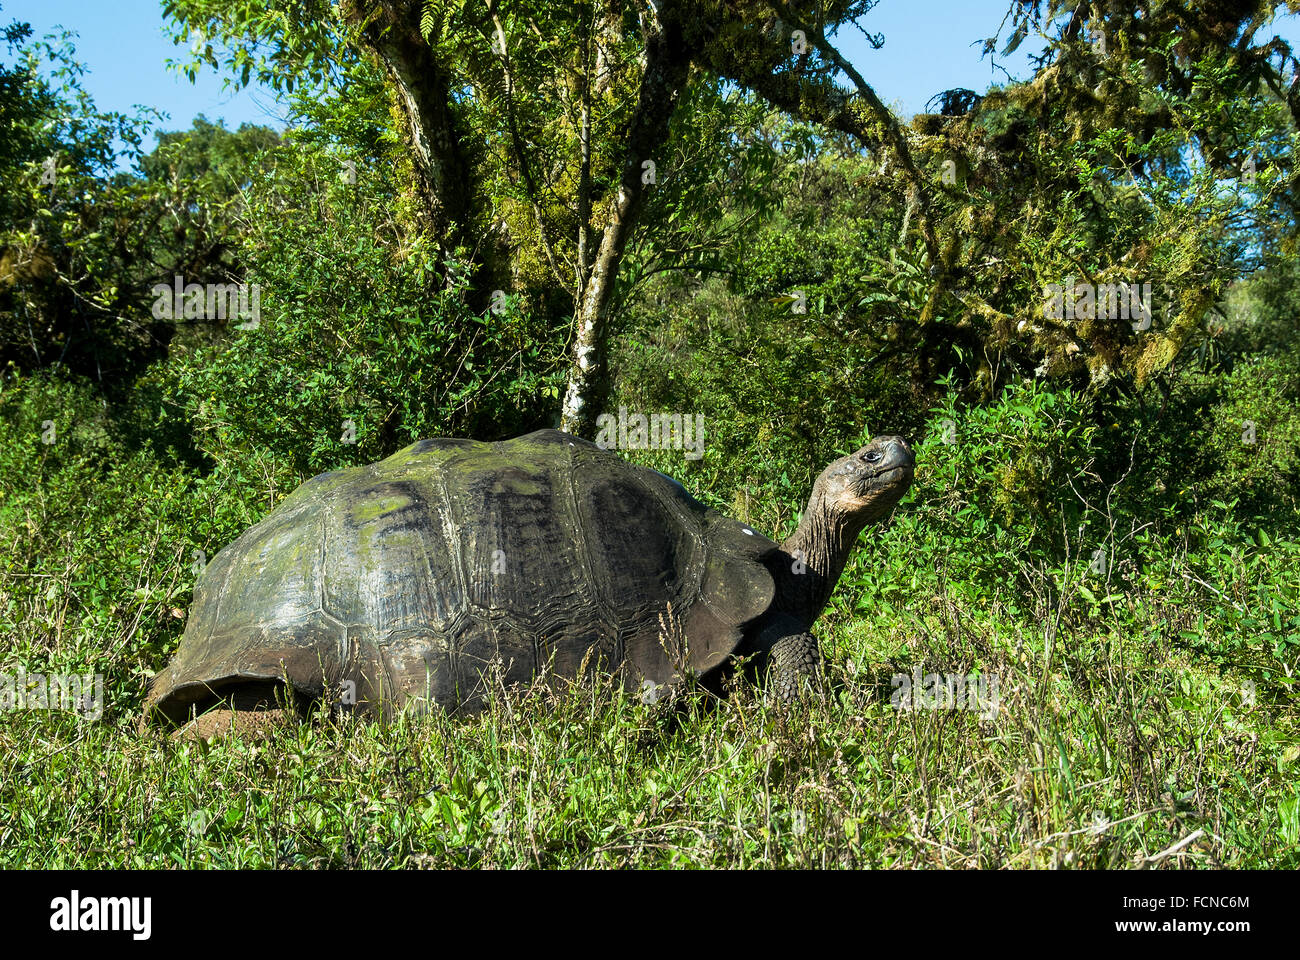 Galapagos Giant Tortoise Geochelone elephantopus porteri Santa Cruz Island Galapagos Islands Ecuador Stock Photo